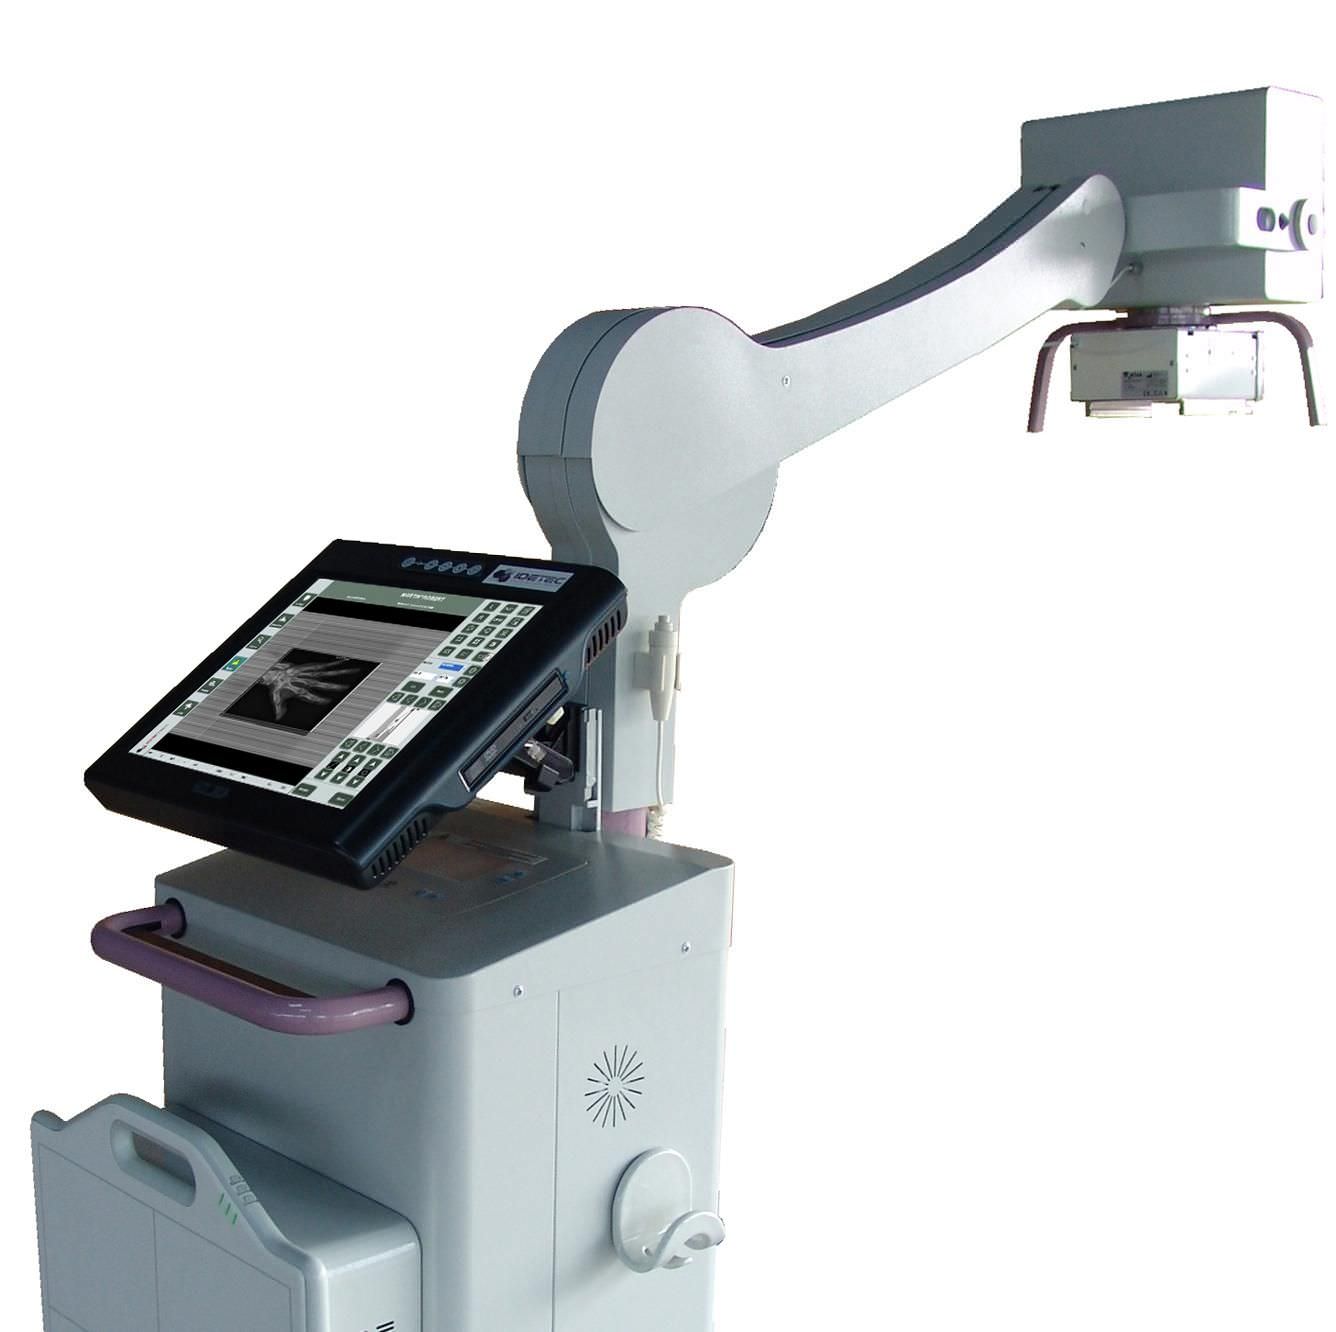 Digital mobile radiographic unit Mobile DR Idetec Medical Imaging